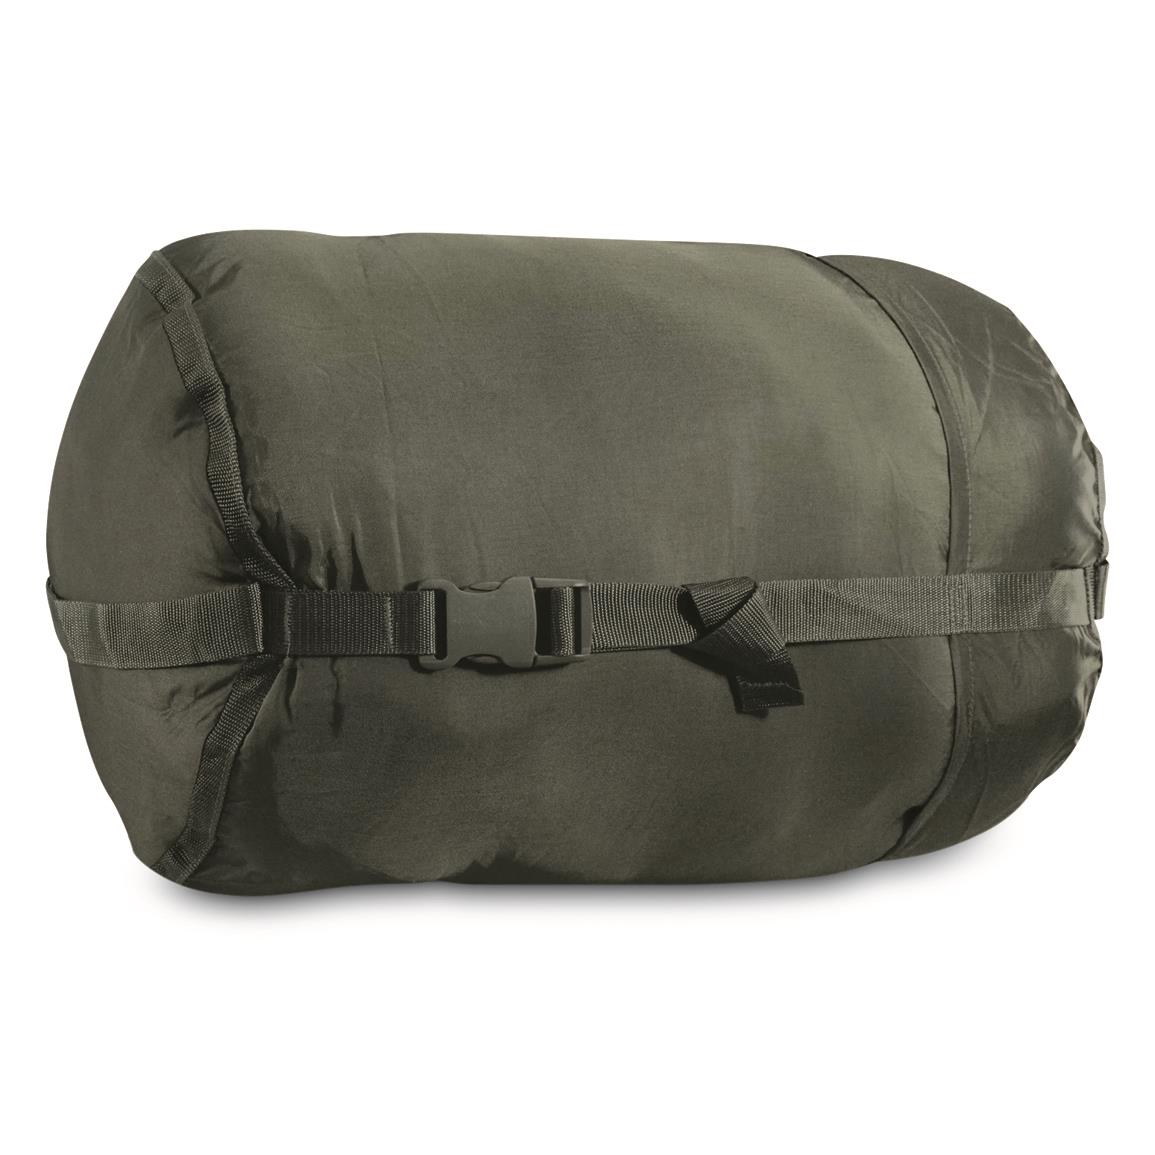 U.S. Military Surplus Compression Bag, Like New, Foliage